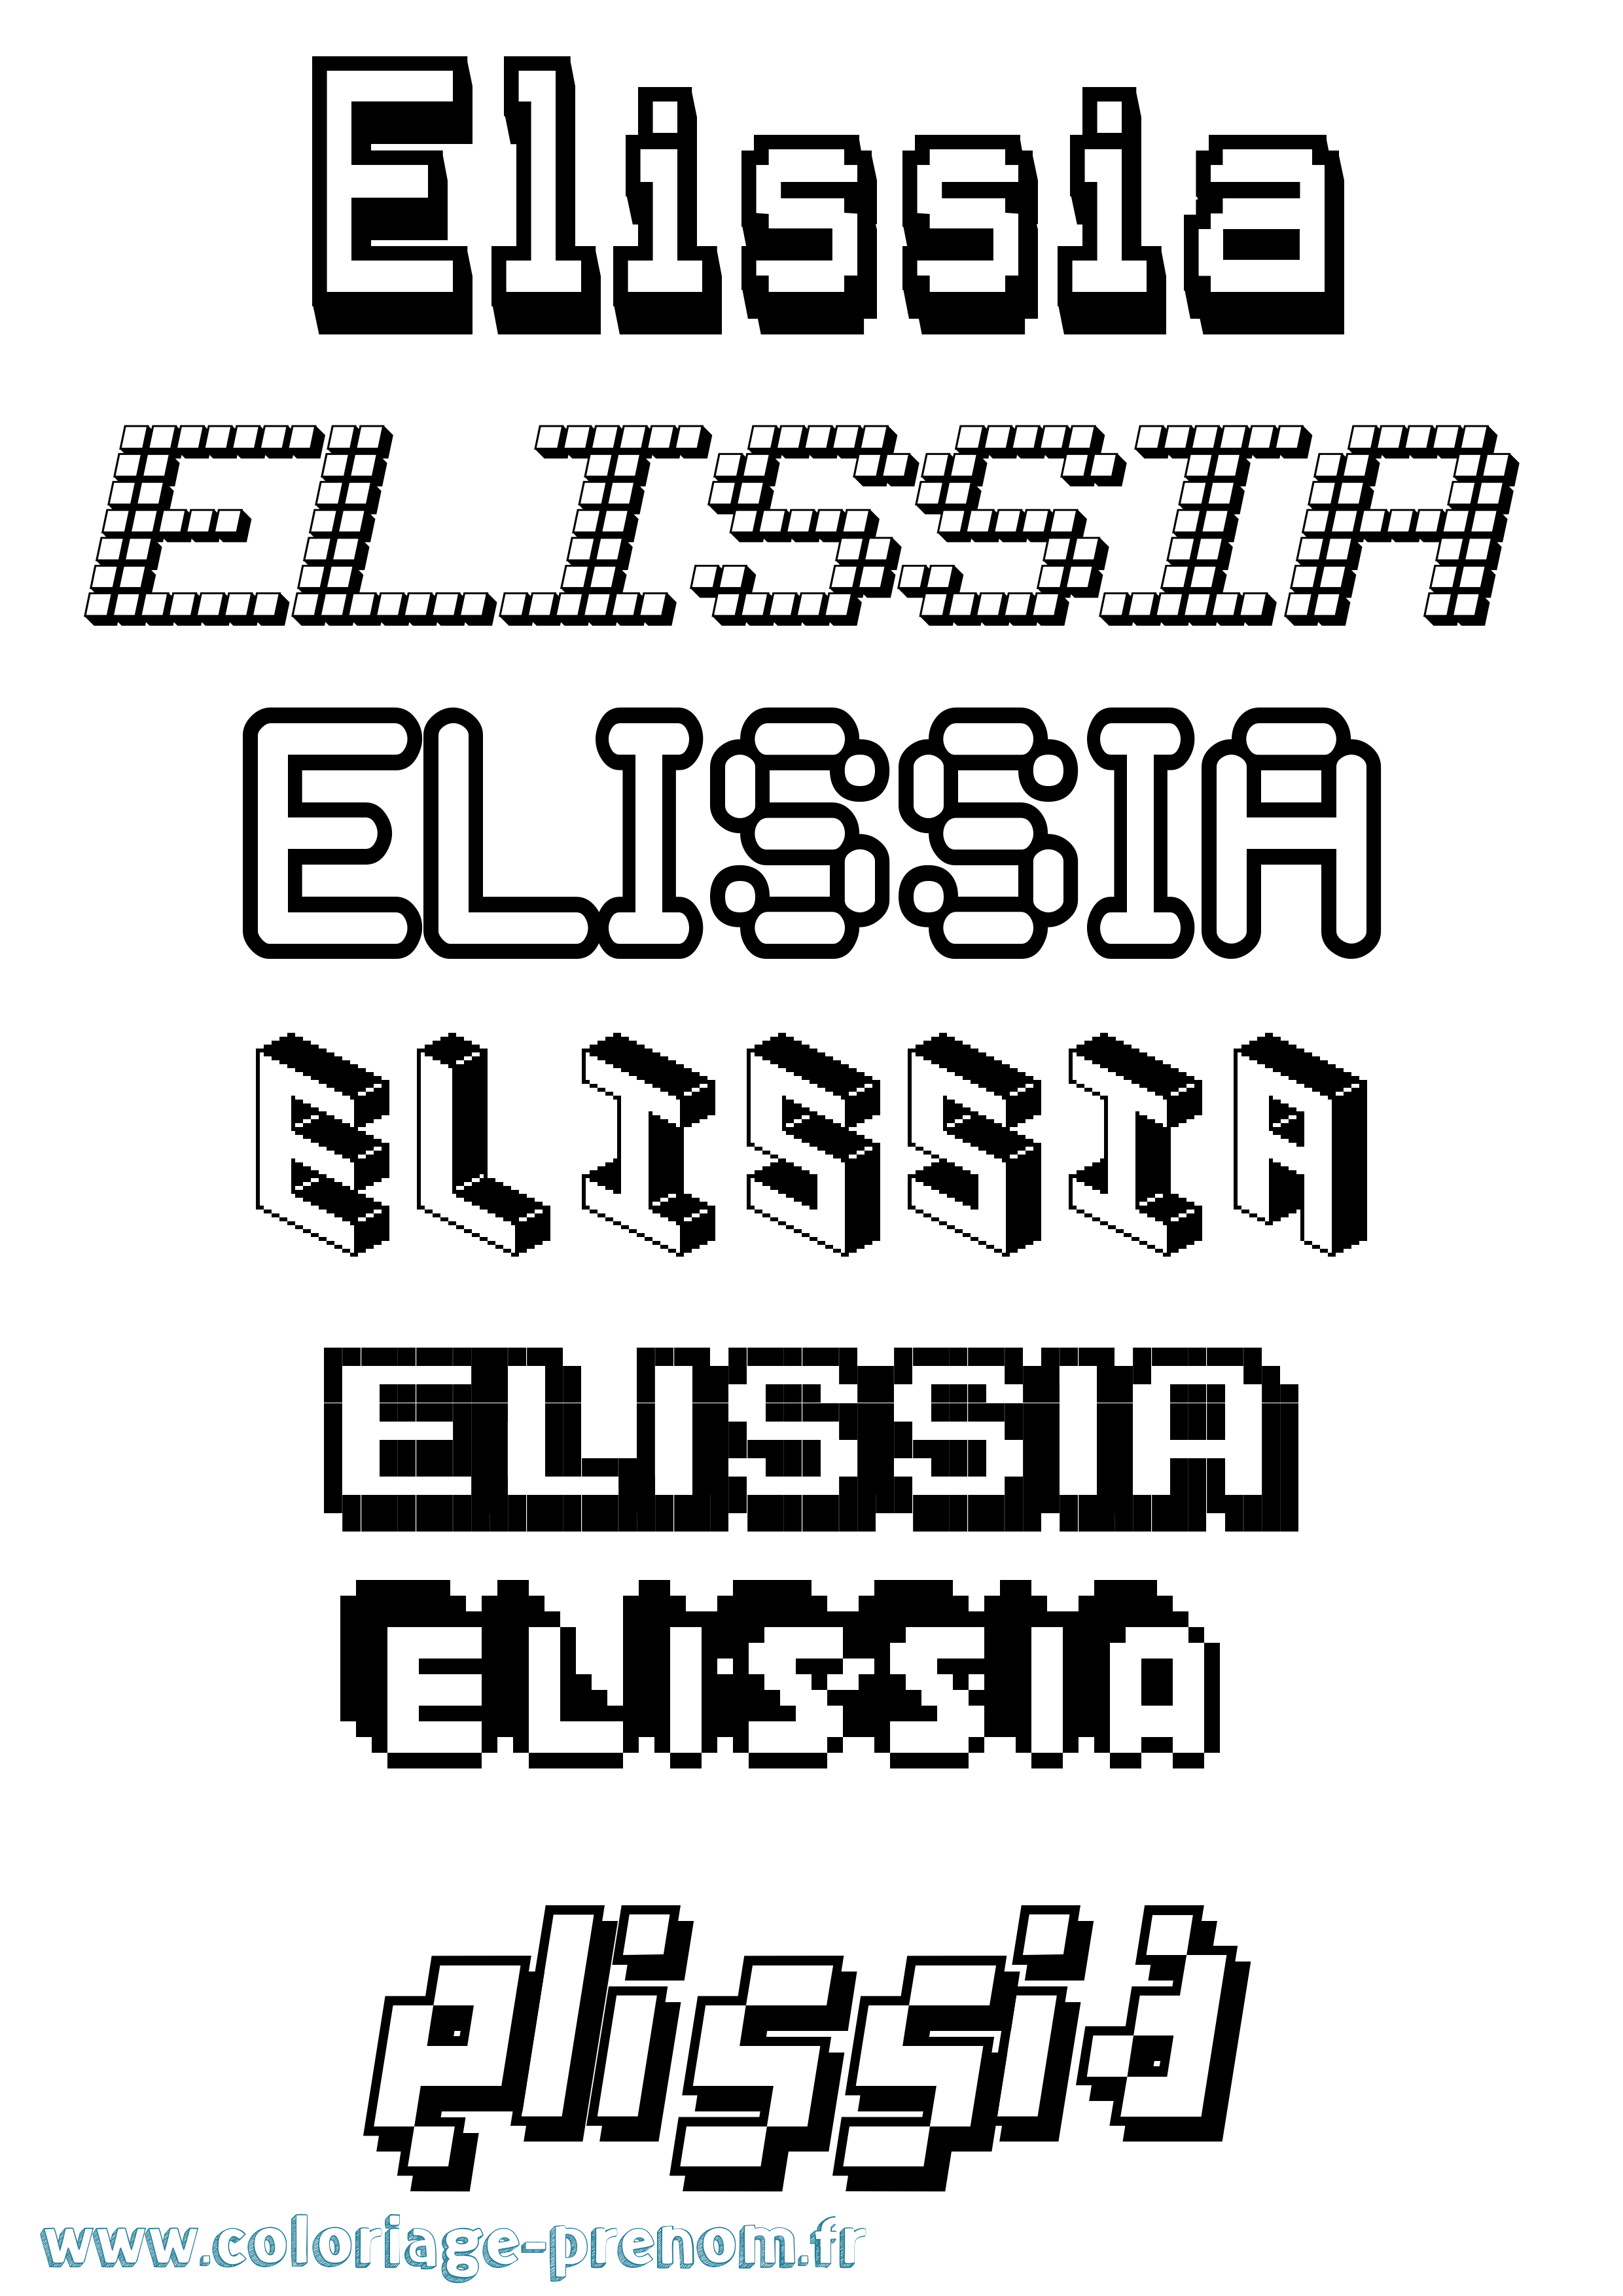 Coloriage prénom Elissia Pixel